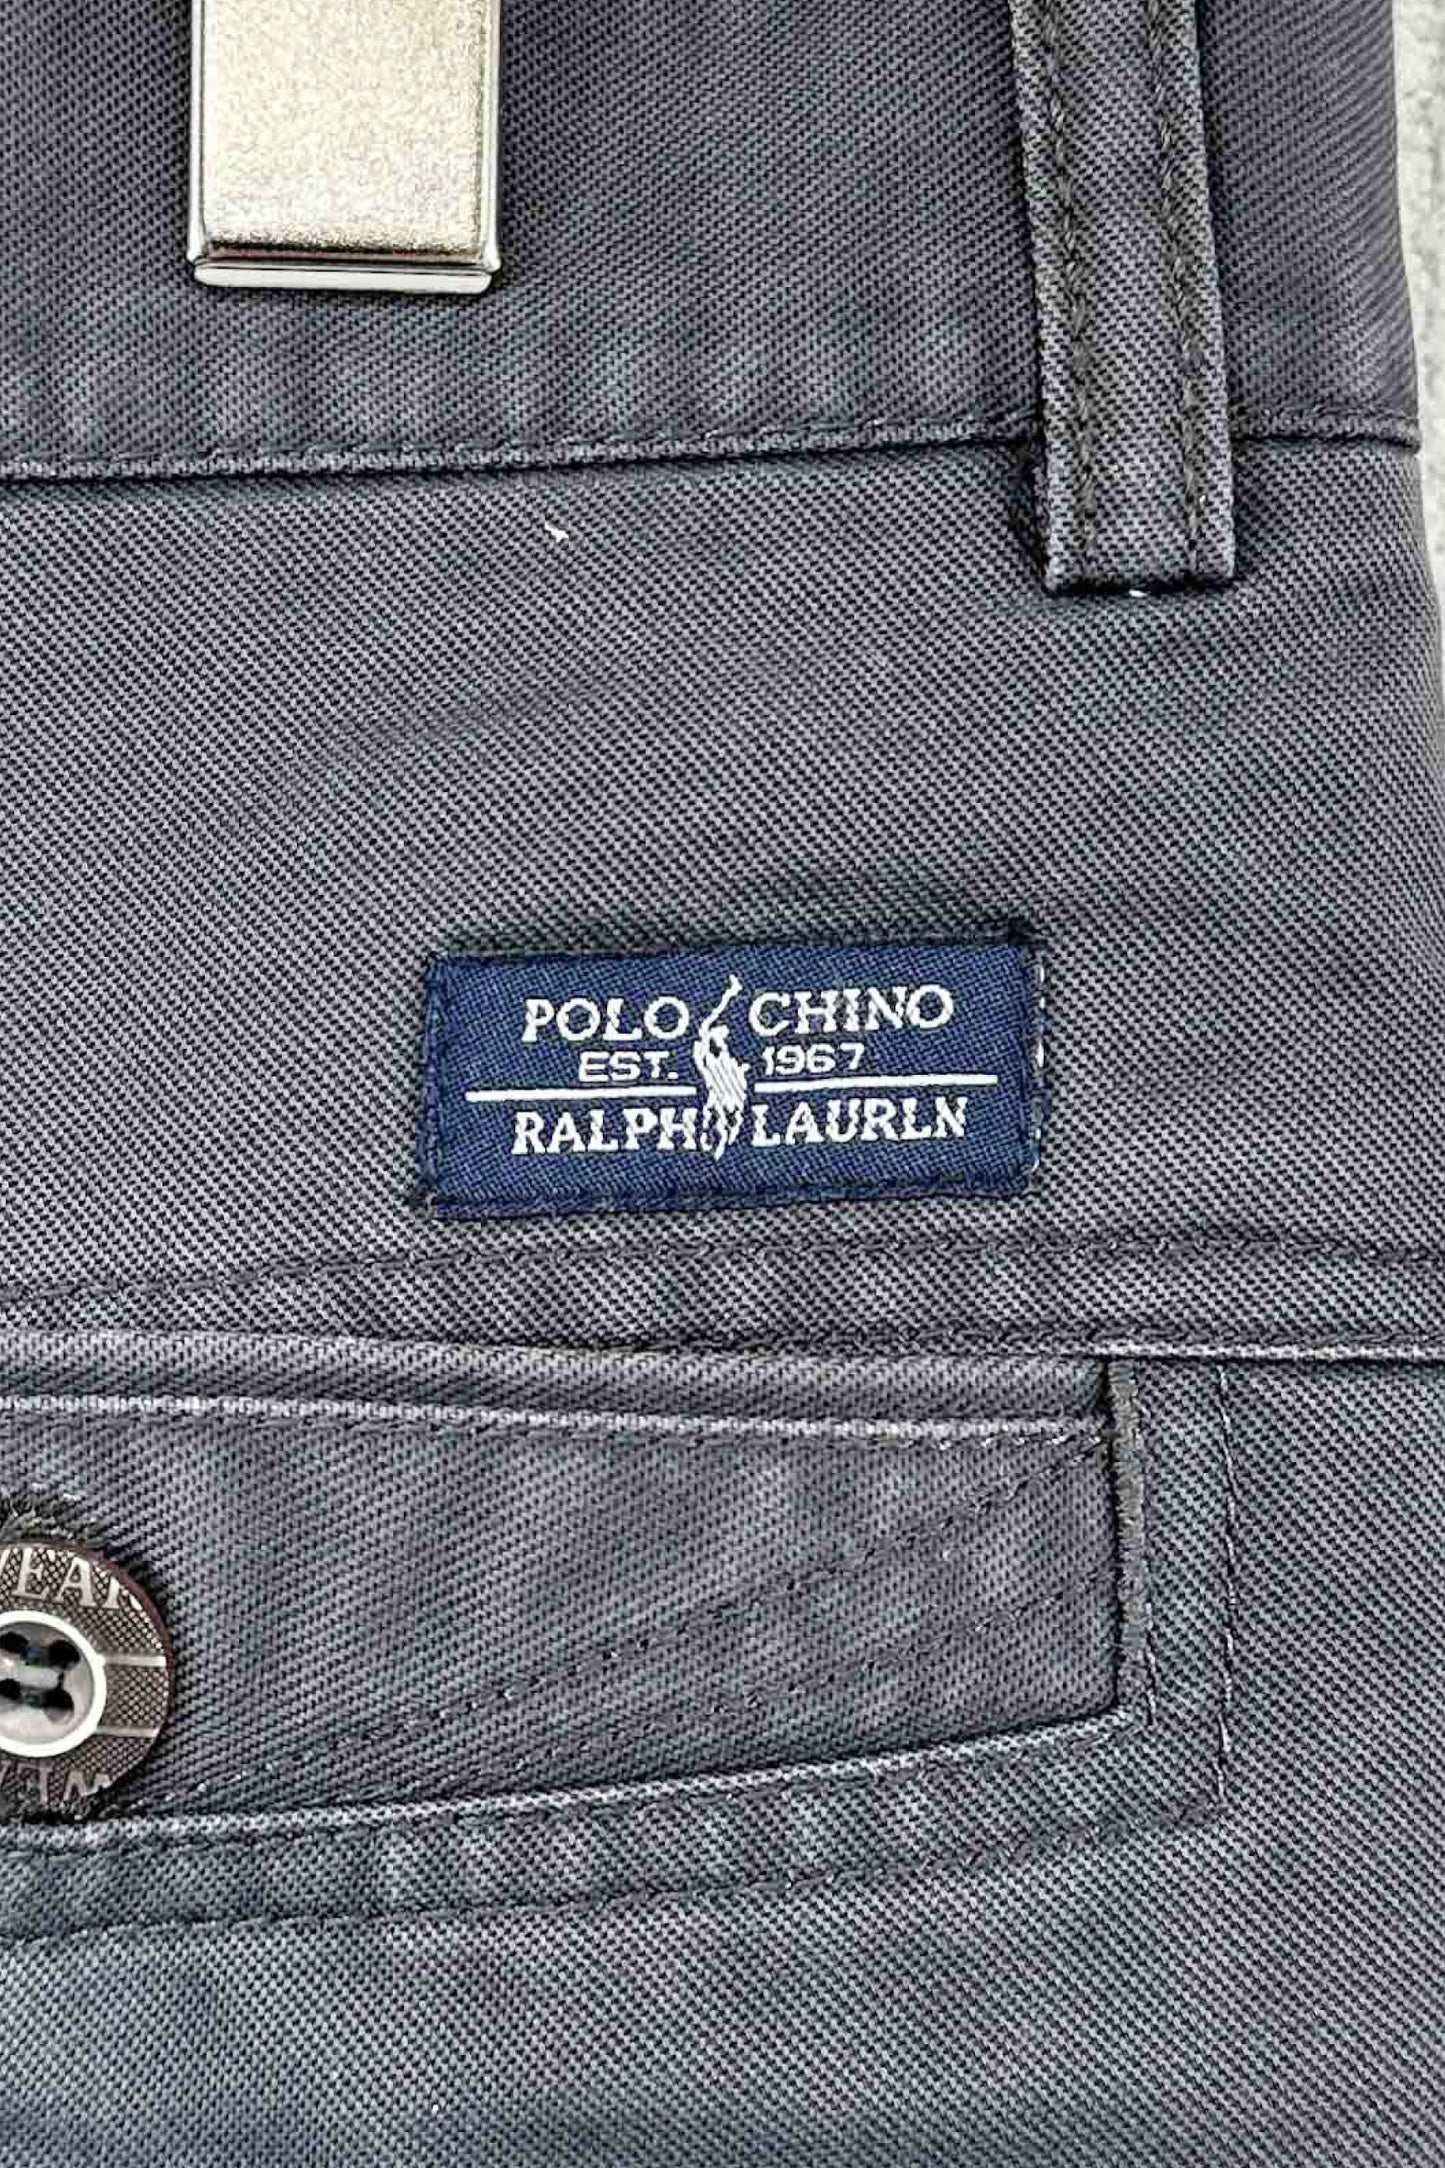 POLO CHINO RALPH LAUREN pants